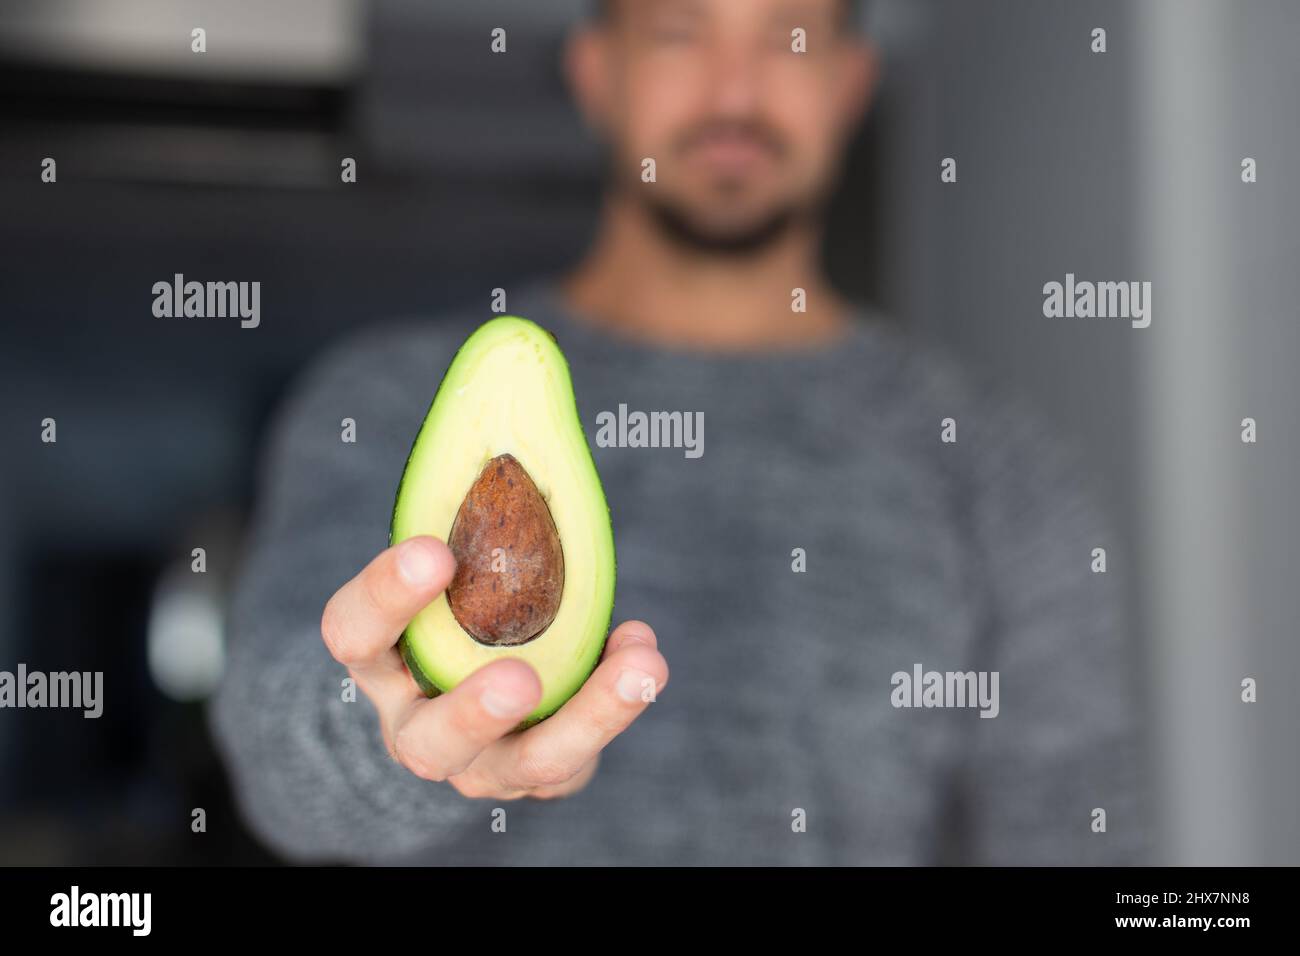 Young Caucasian 30s man holding halved avocado, selective focus Stock Photo